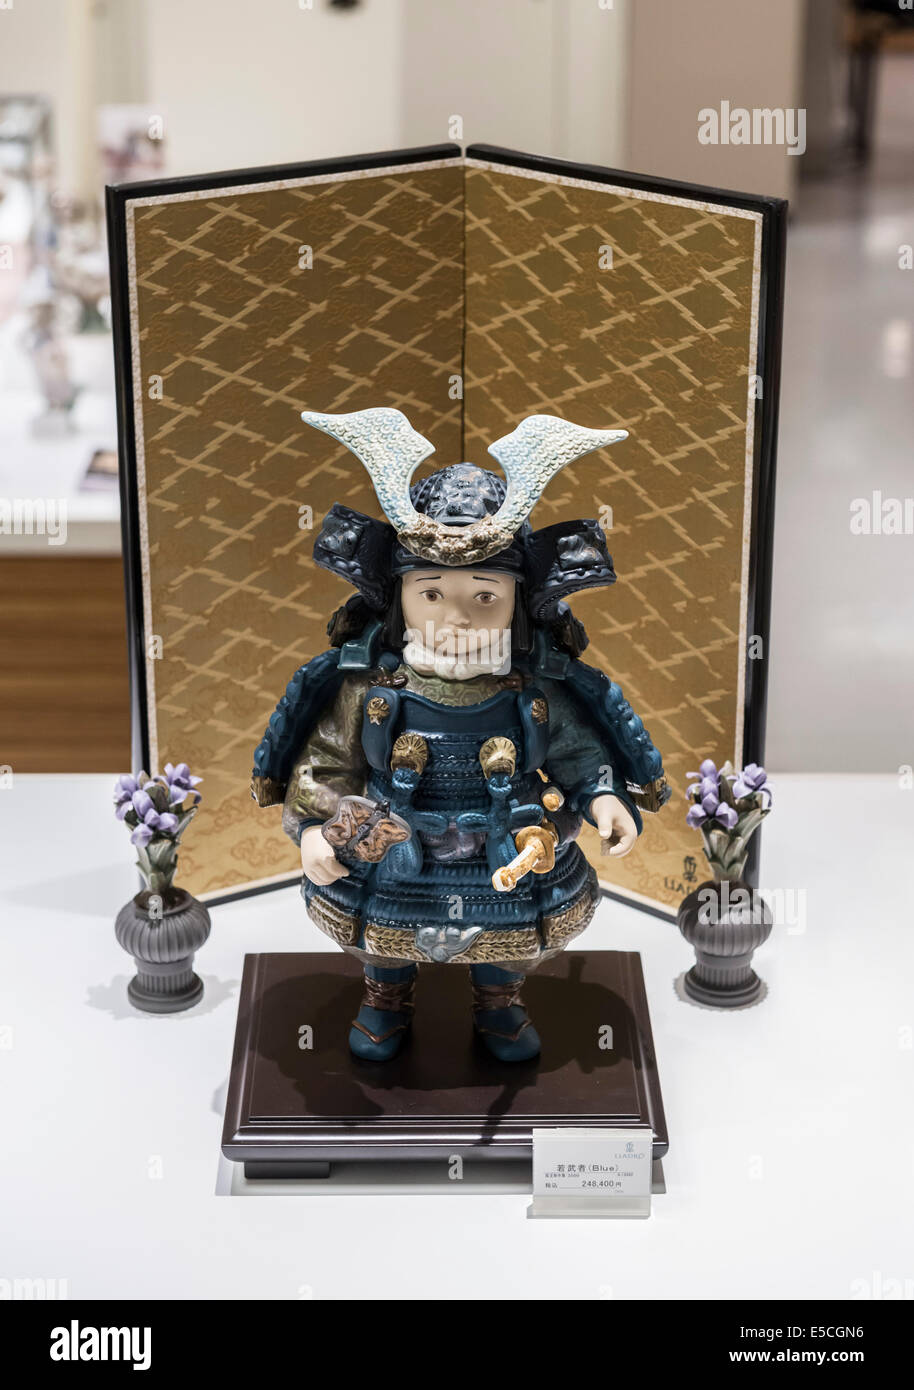 Baby Samurai Wearing Armour Souvenir Sculpture On Display In A Store Tokyo Japan Stock Photo Alamy